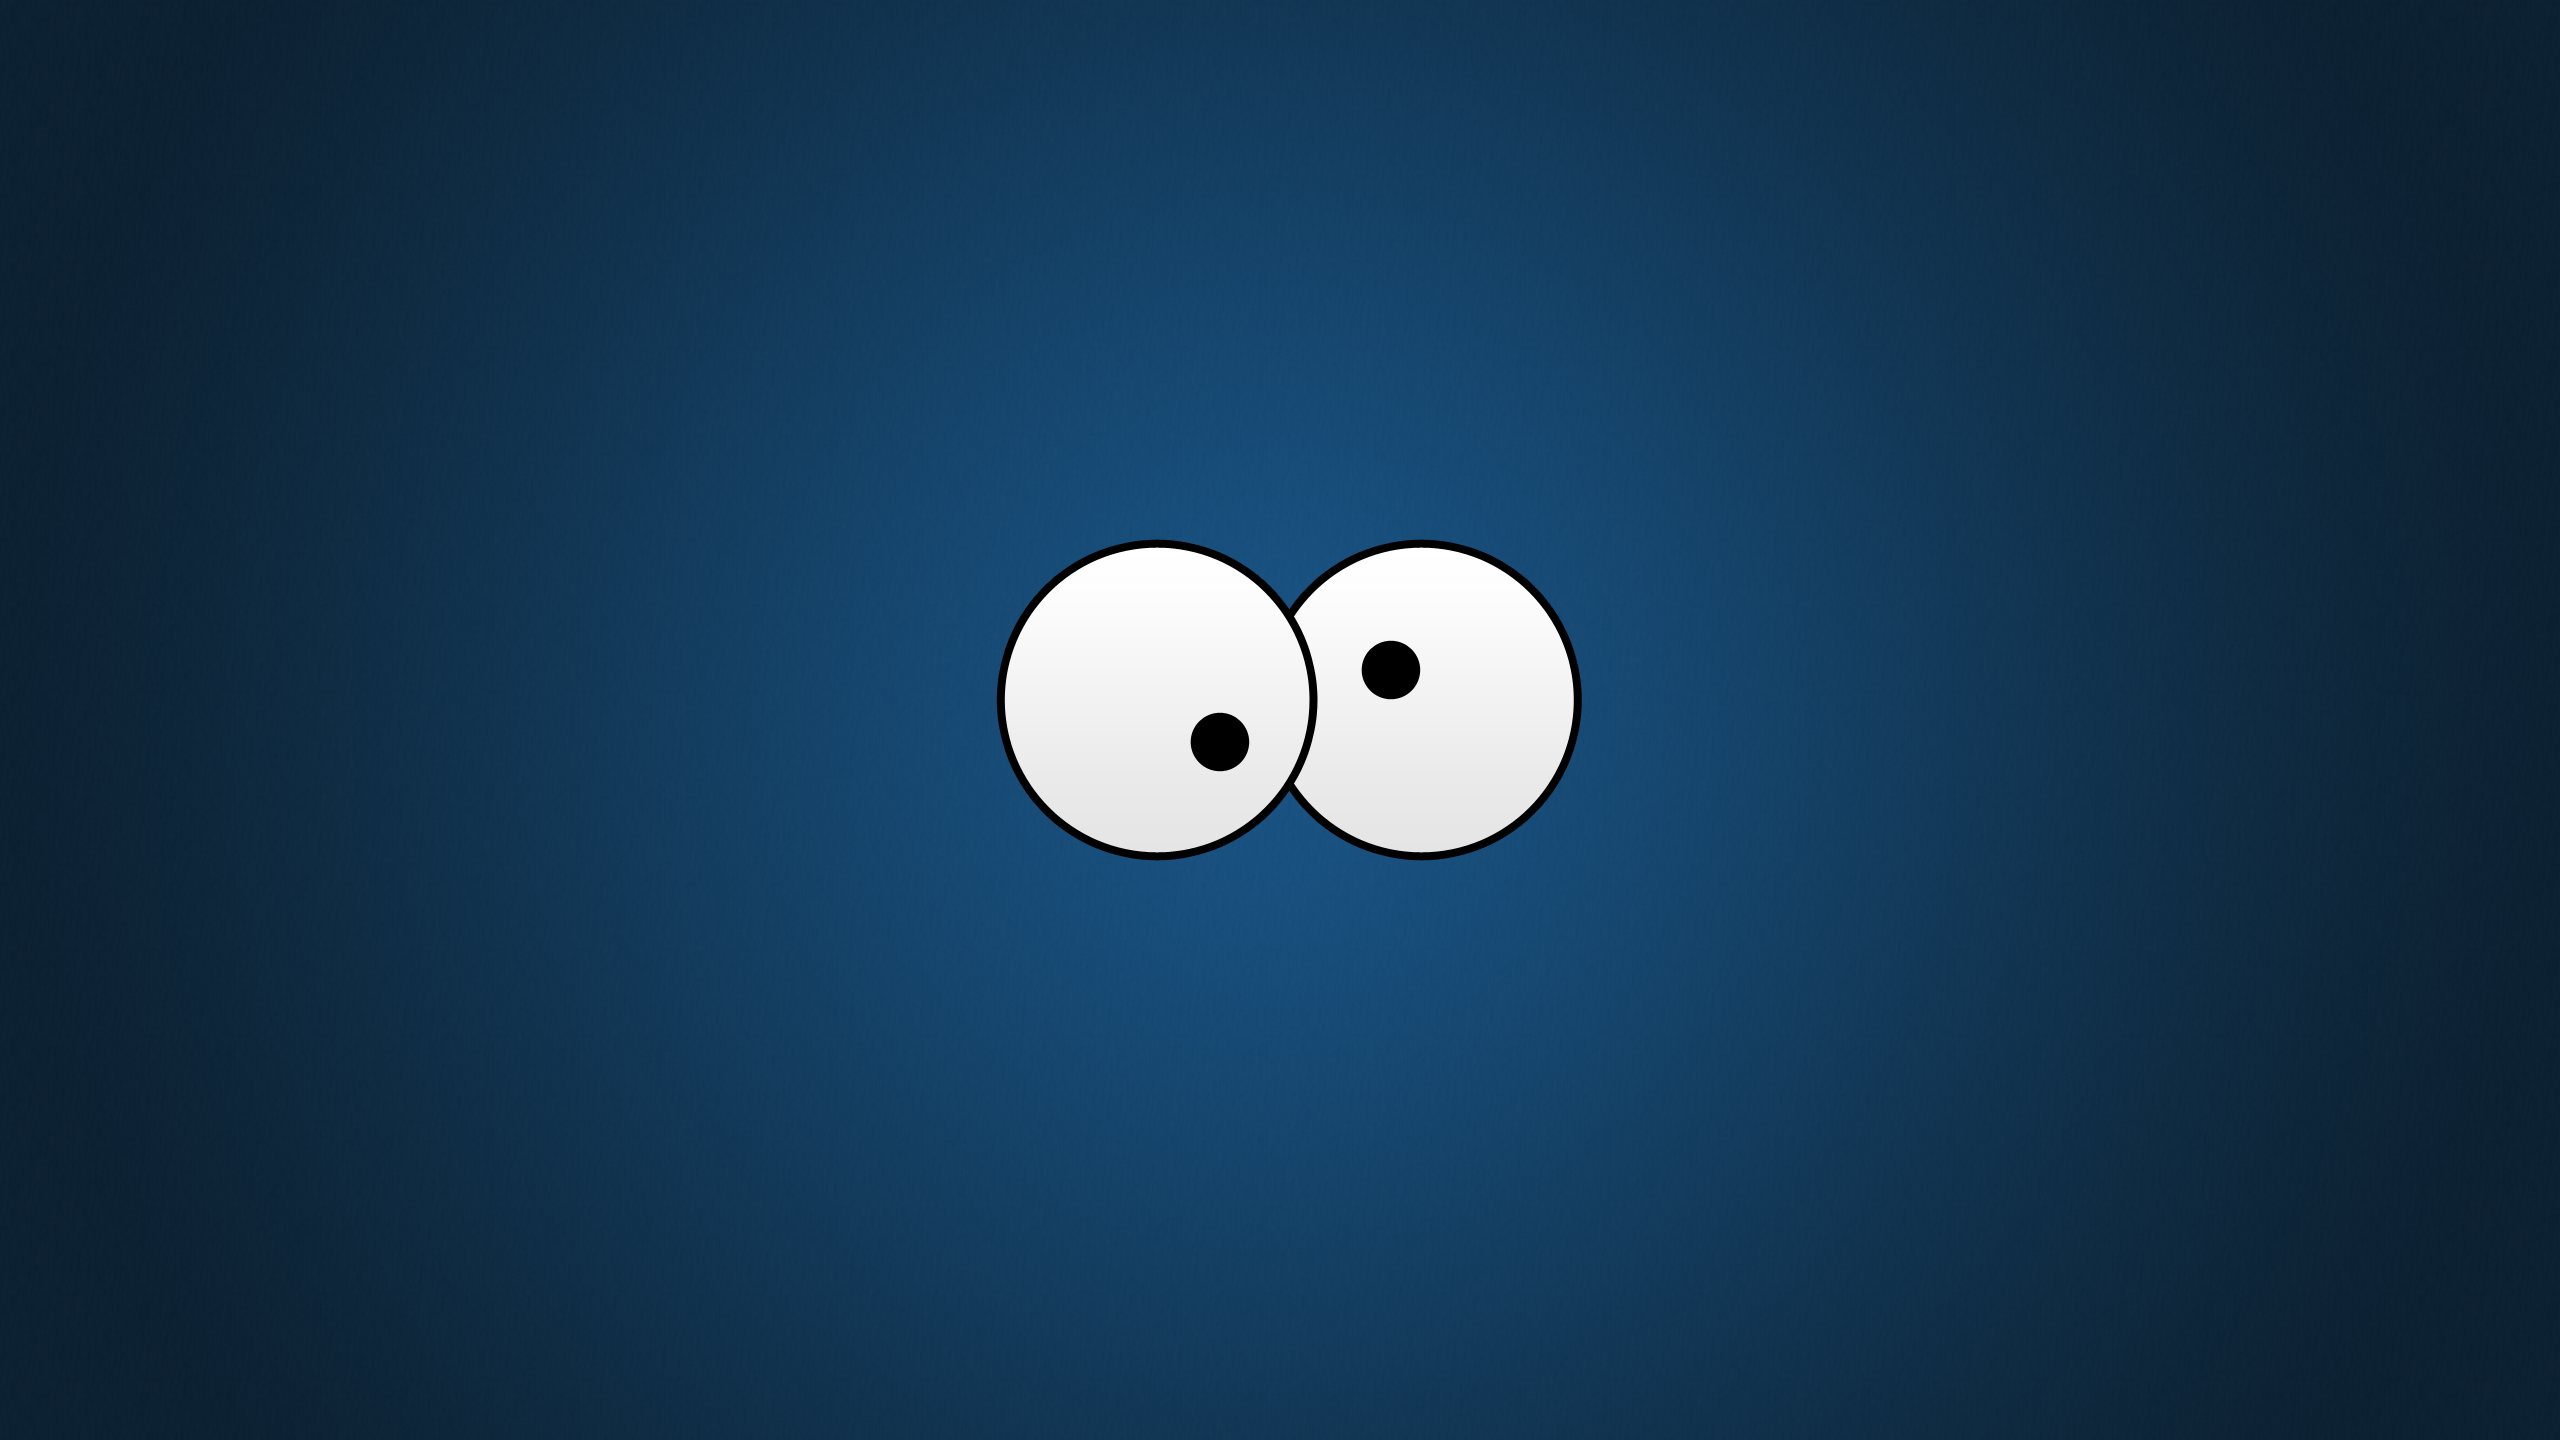 Cookie Monster Cartoon Blue Background Blue 2560x1440